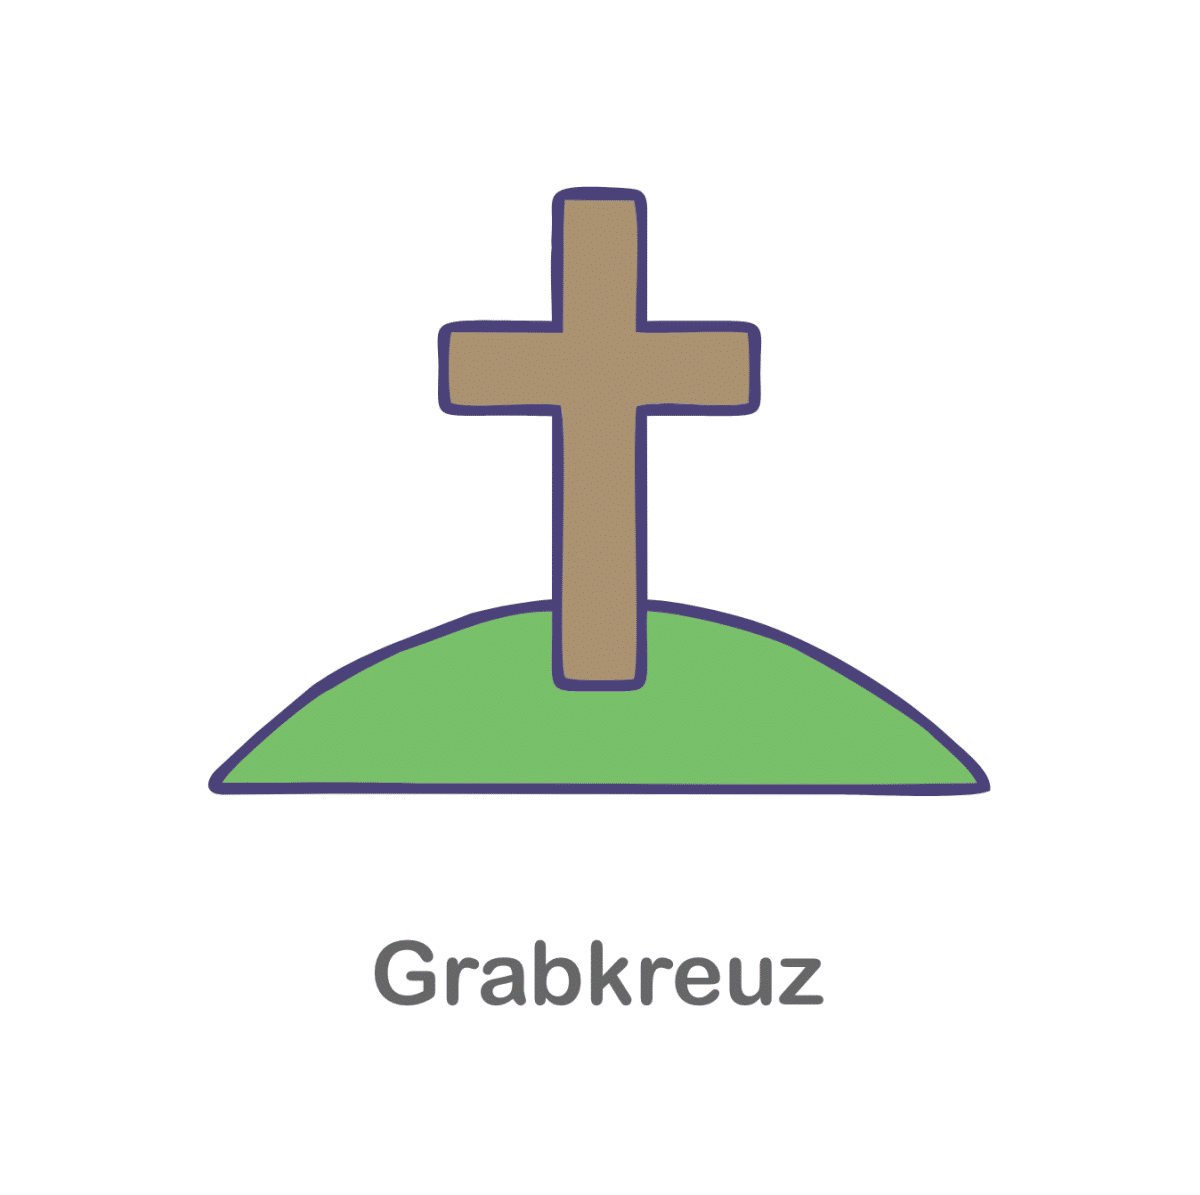 Grabkreuz